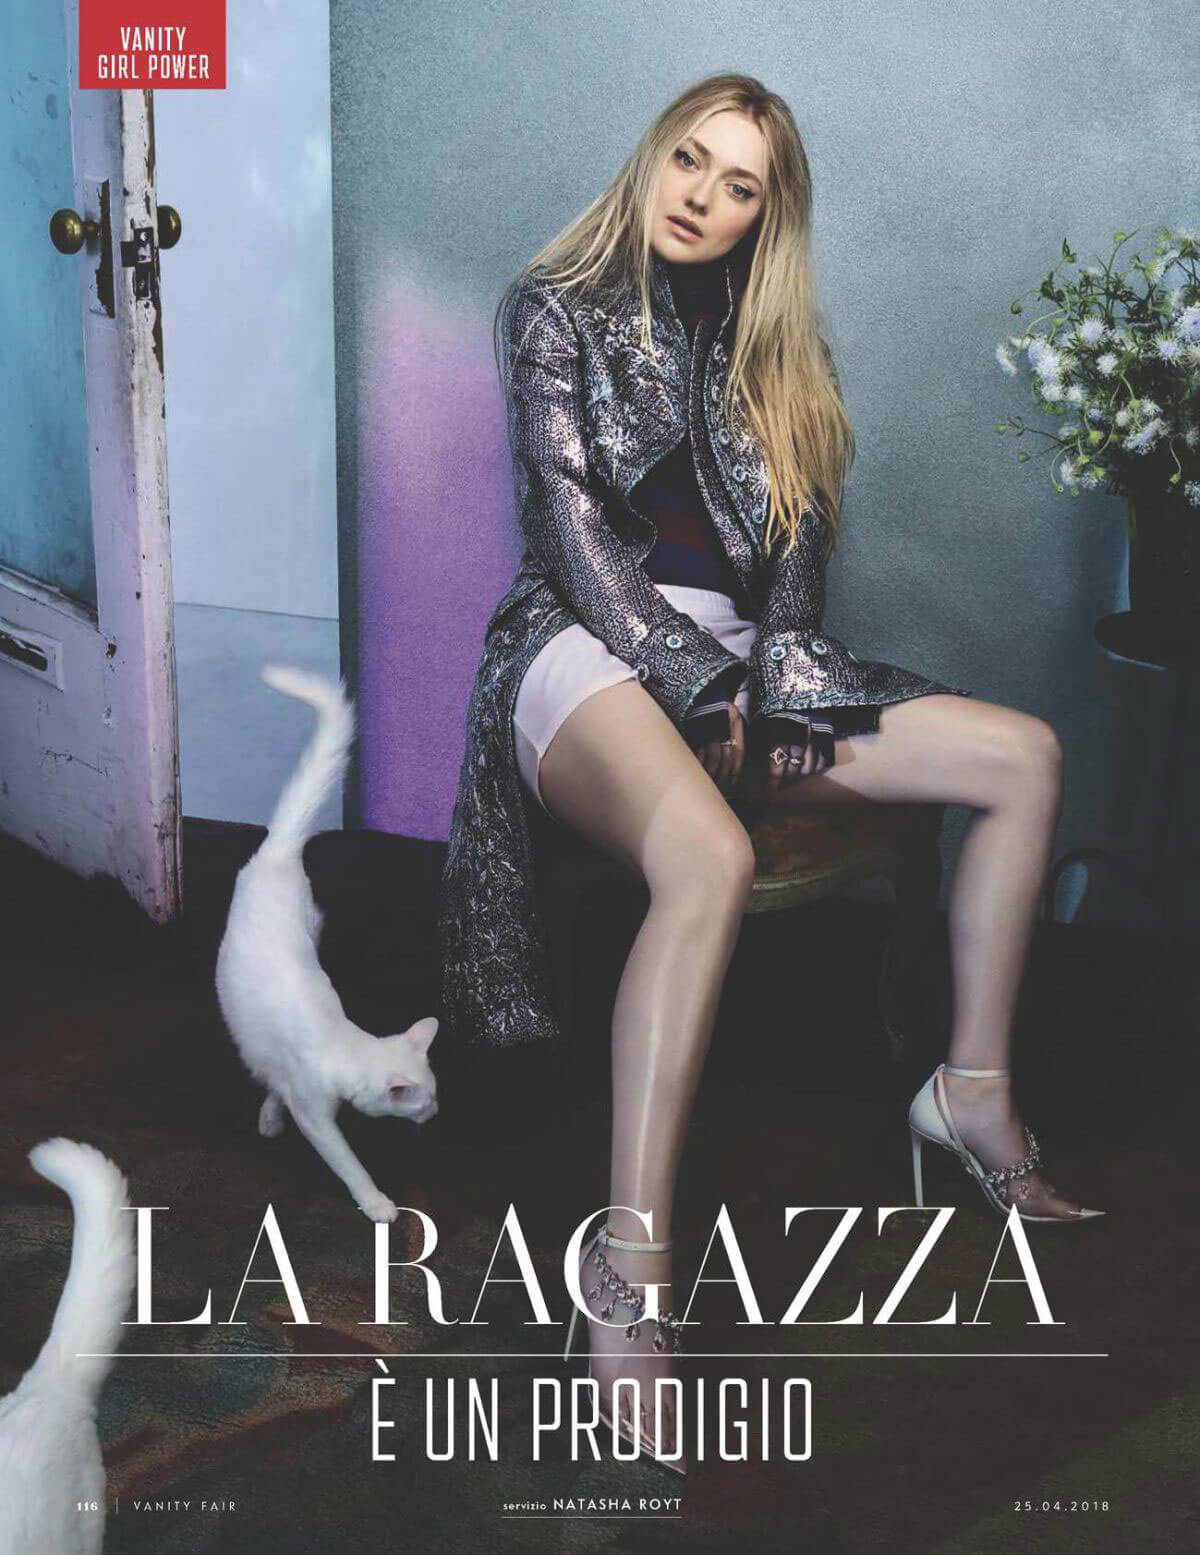 Dakota Fanning Poses for Vanity Fair Magazine, Italy April 2018 Issue